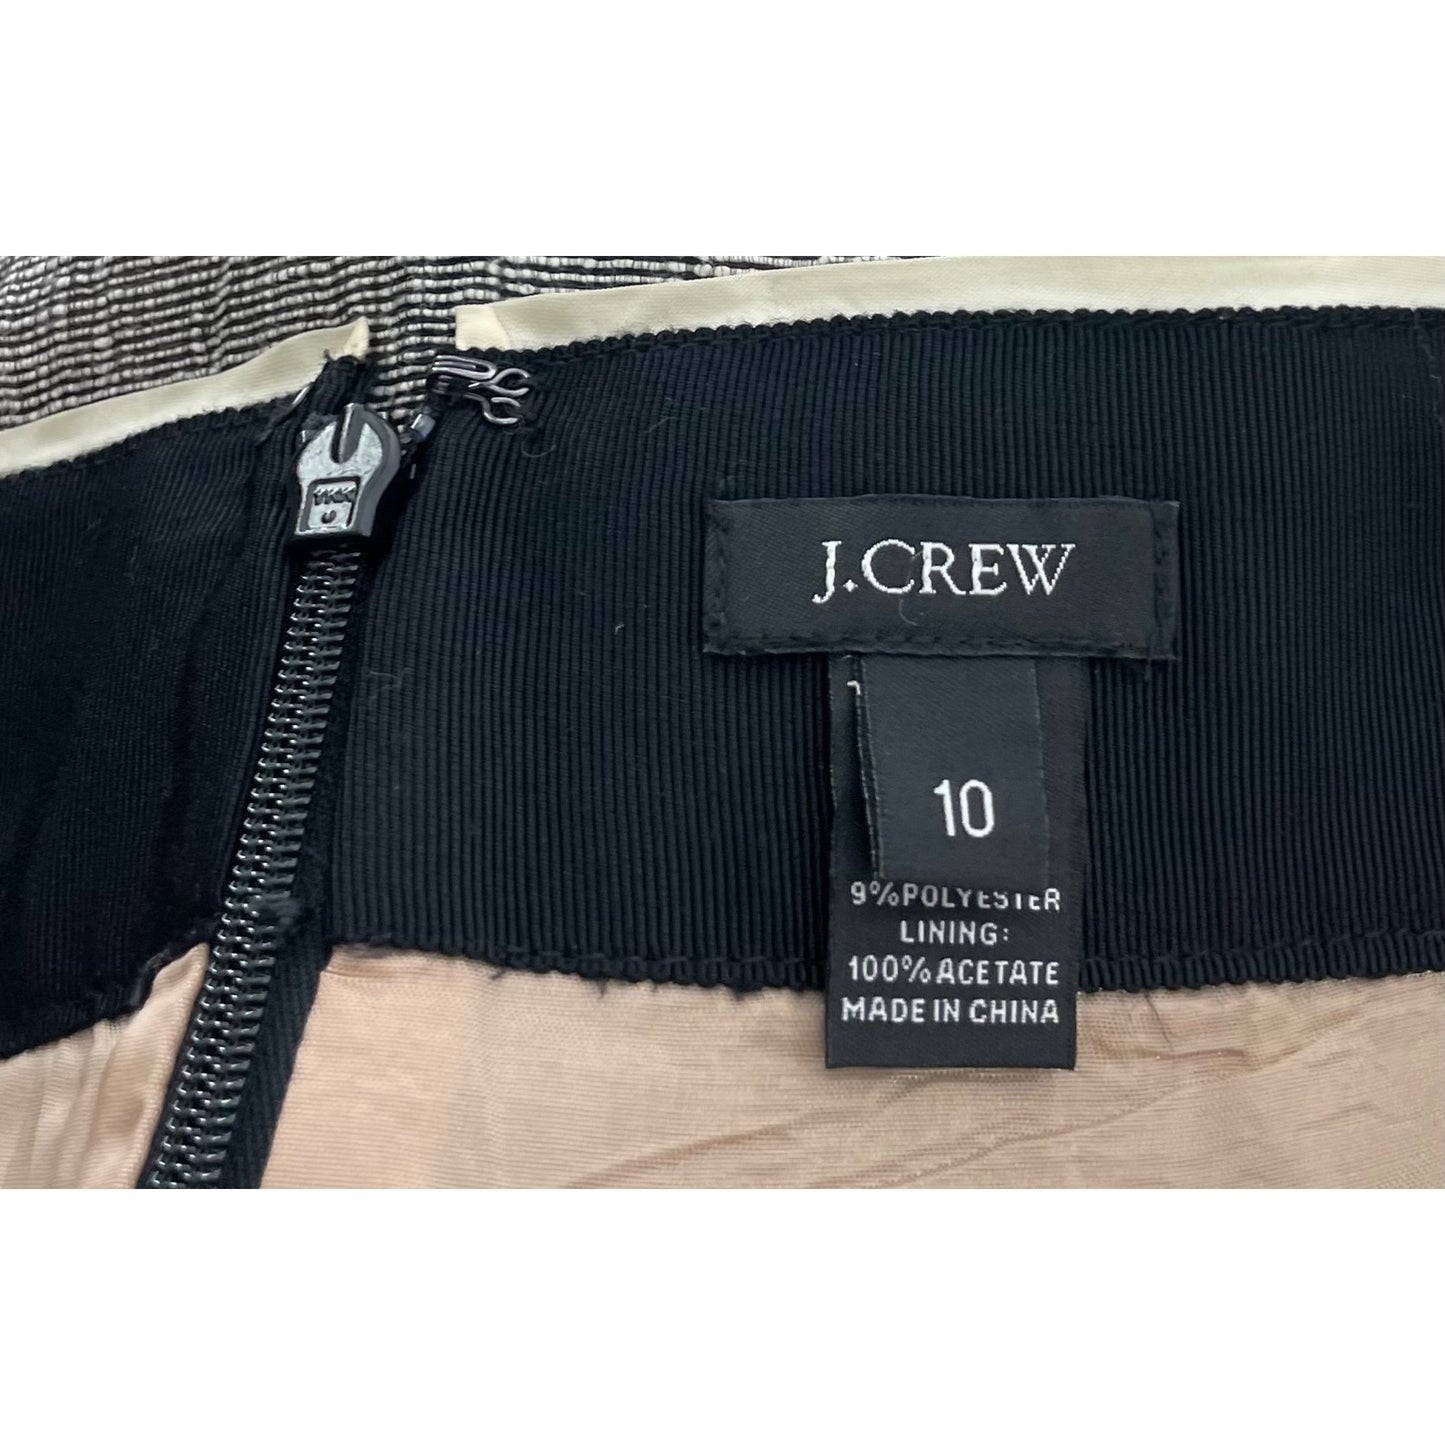 J. Crew Women's Size Ten Black & White/Grey Linen Blend Pencil Skirt